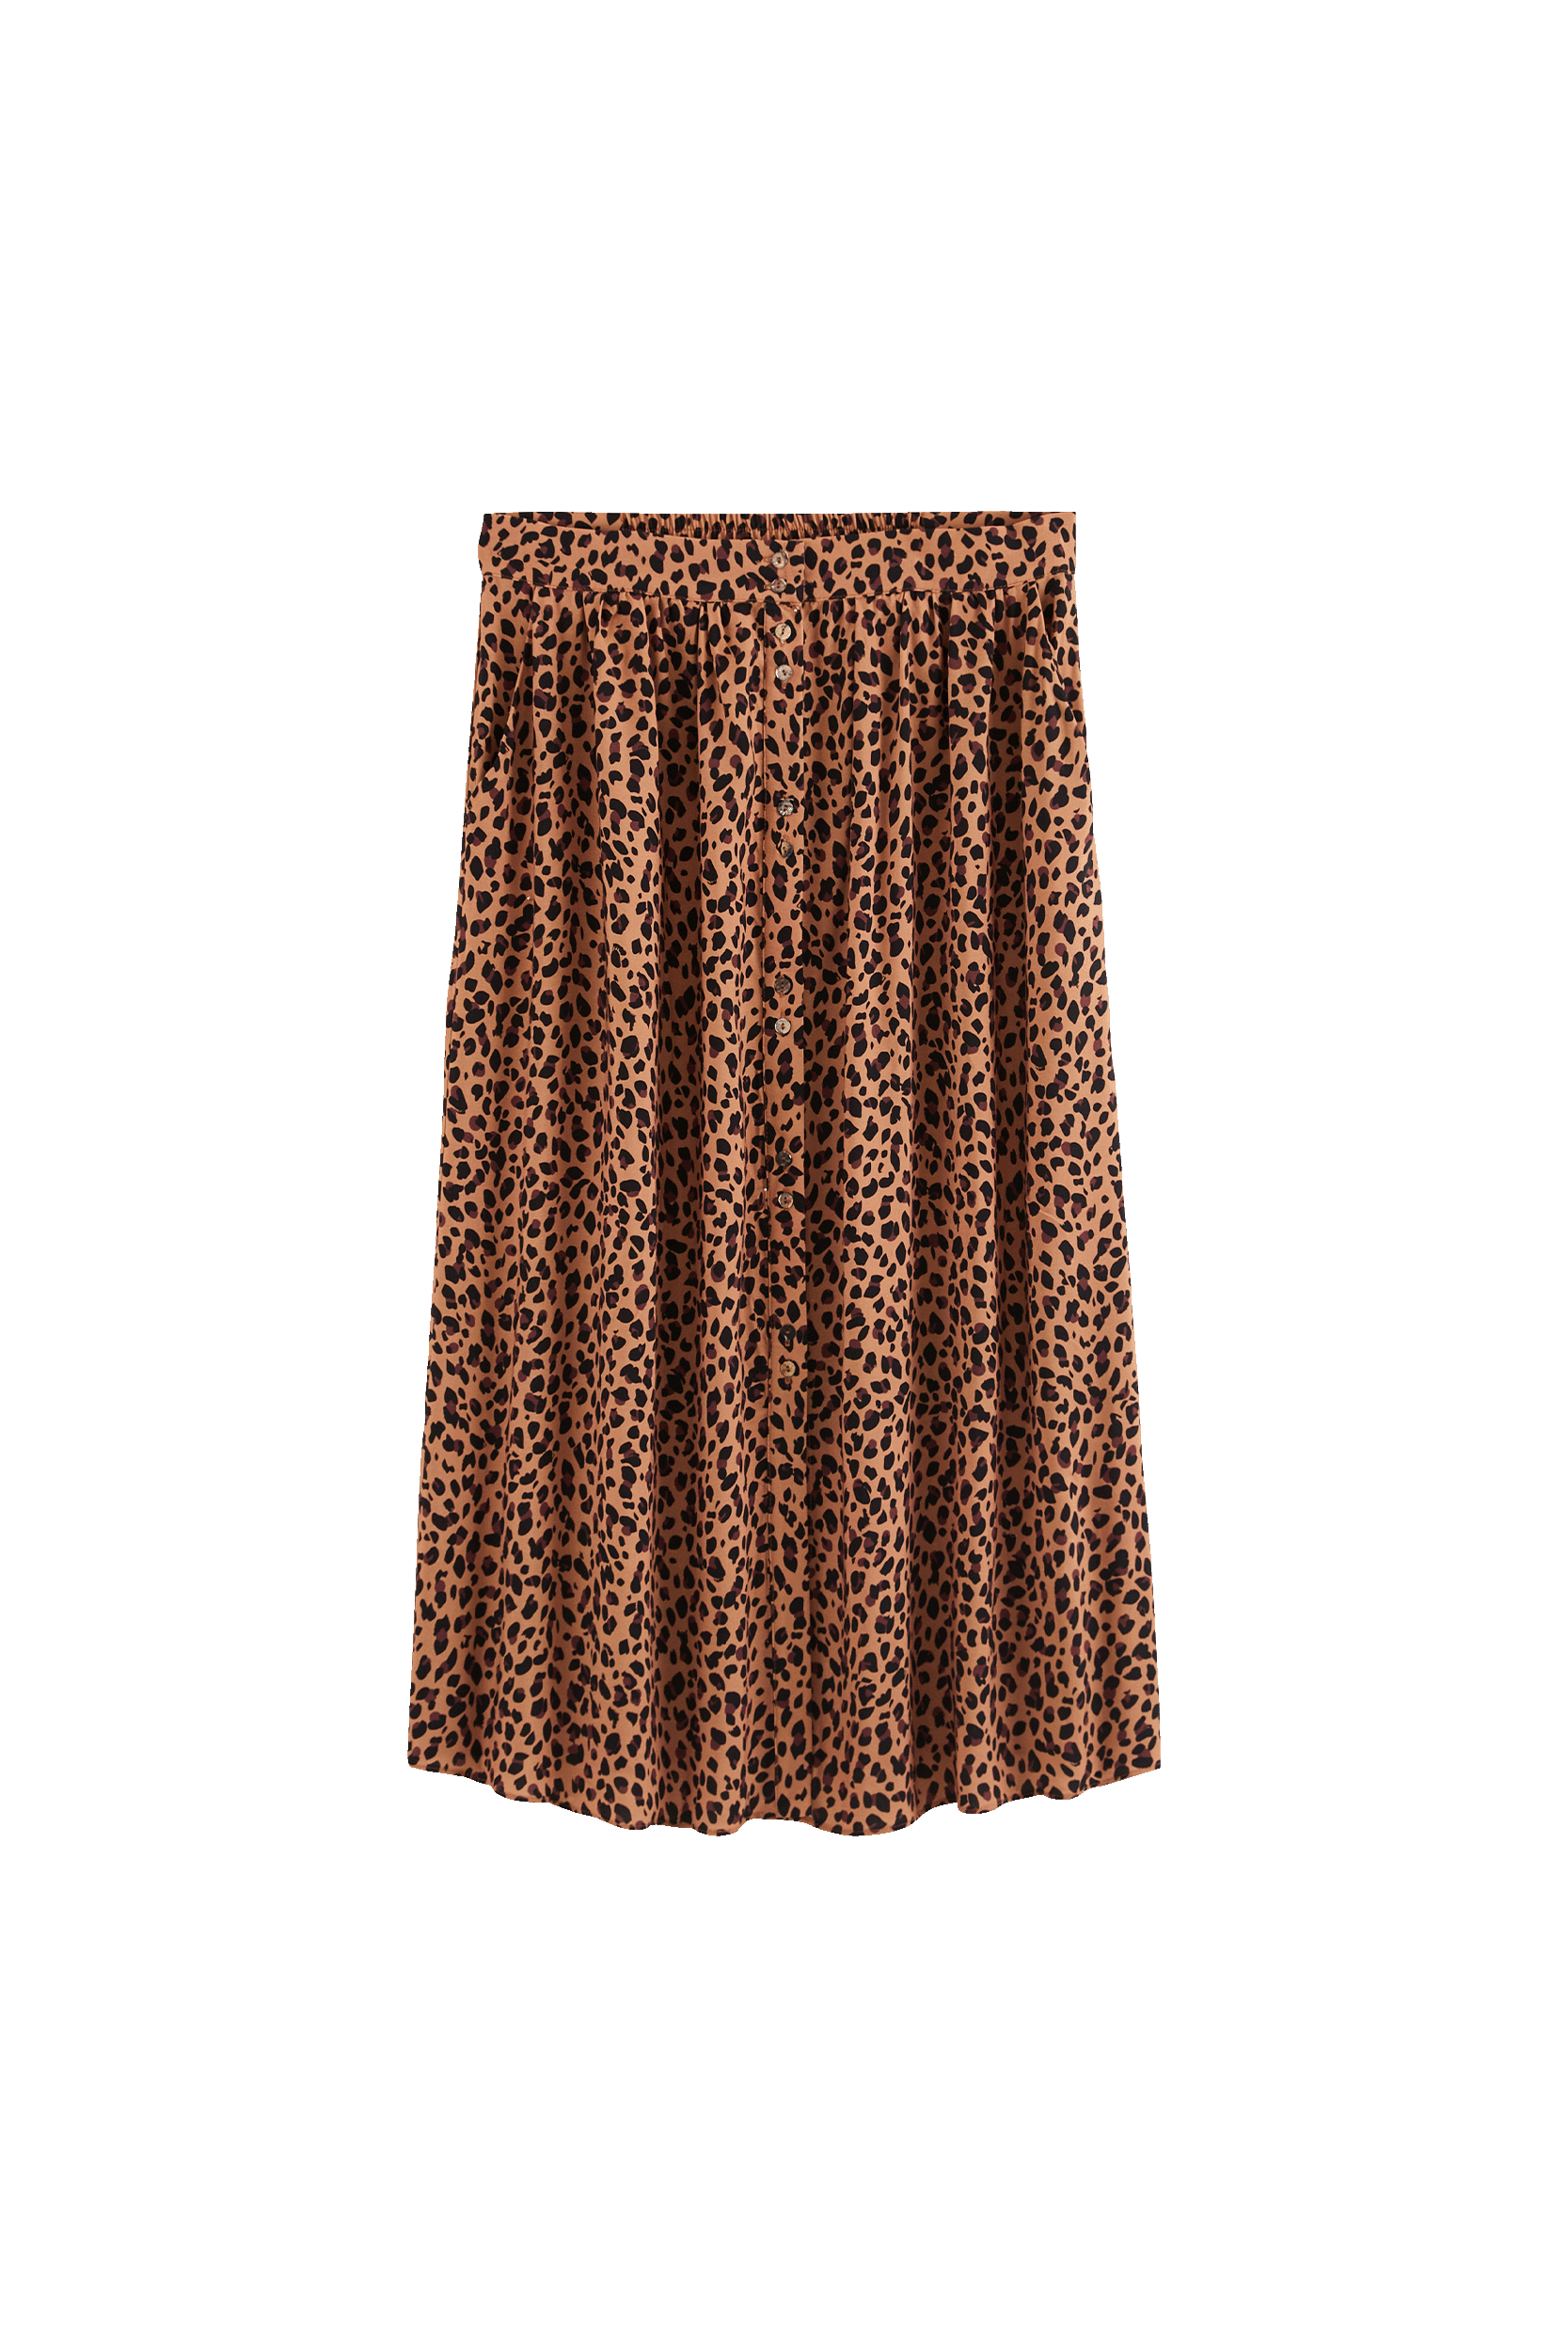 Sally leopard skirt